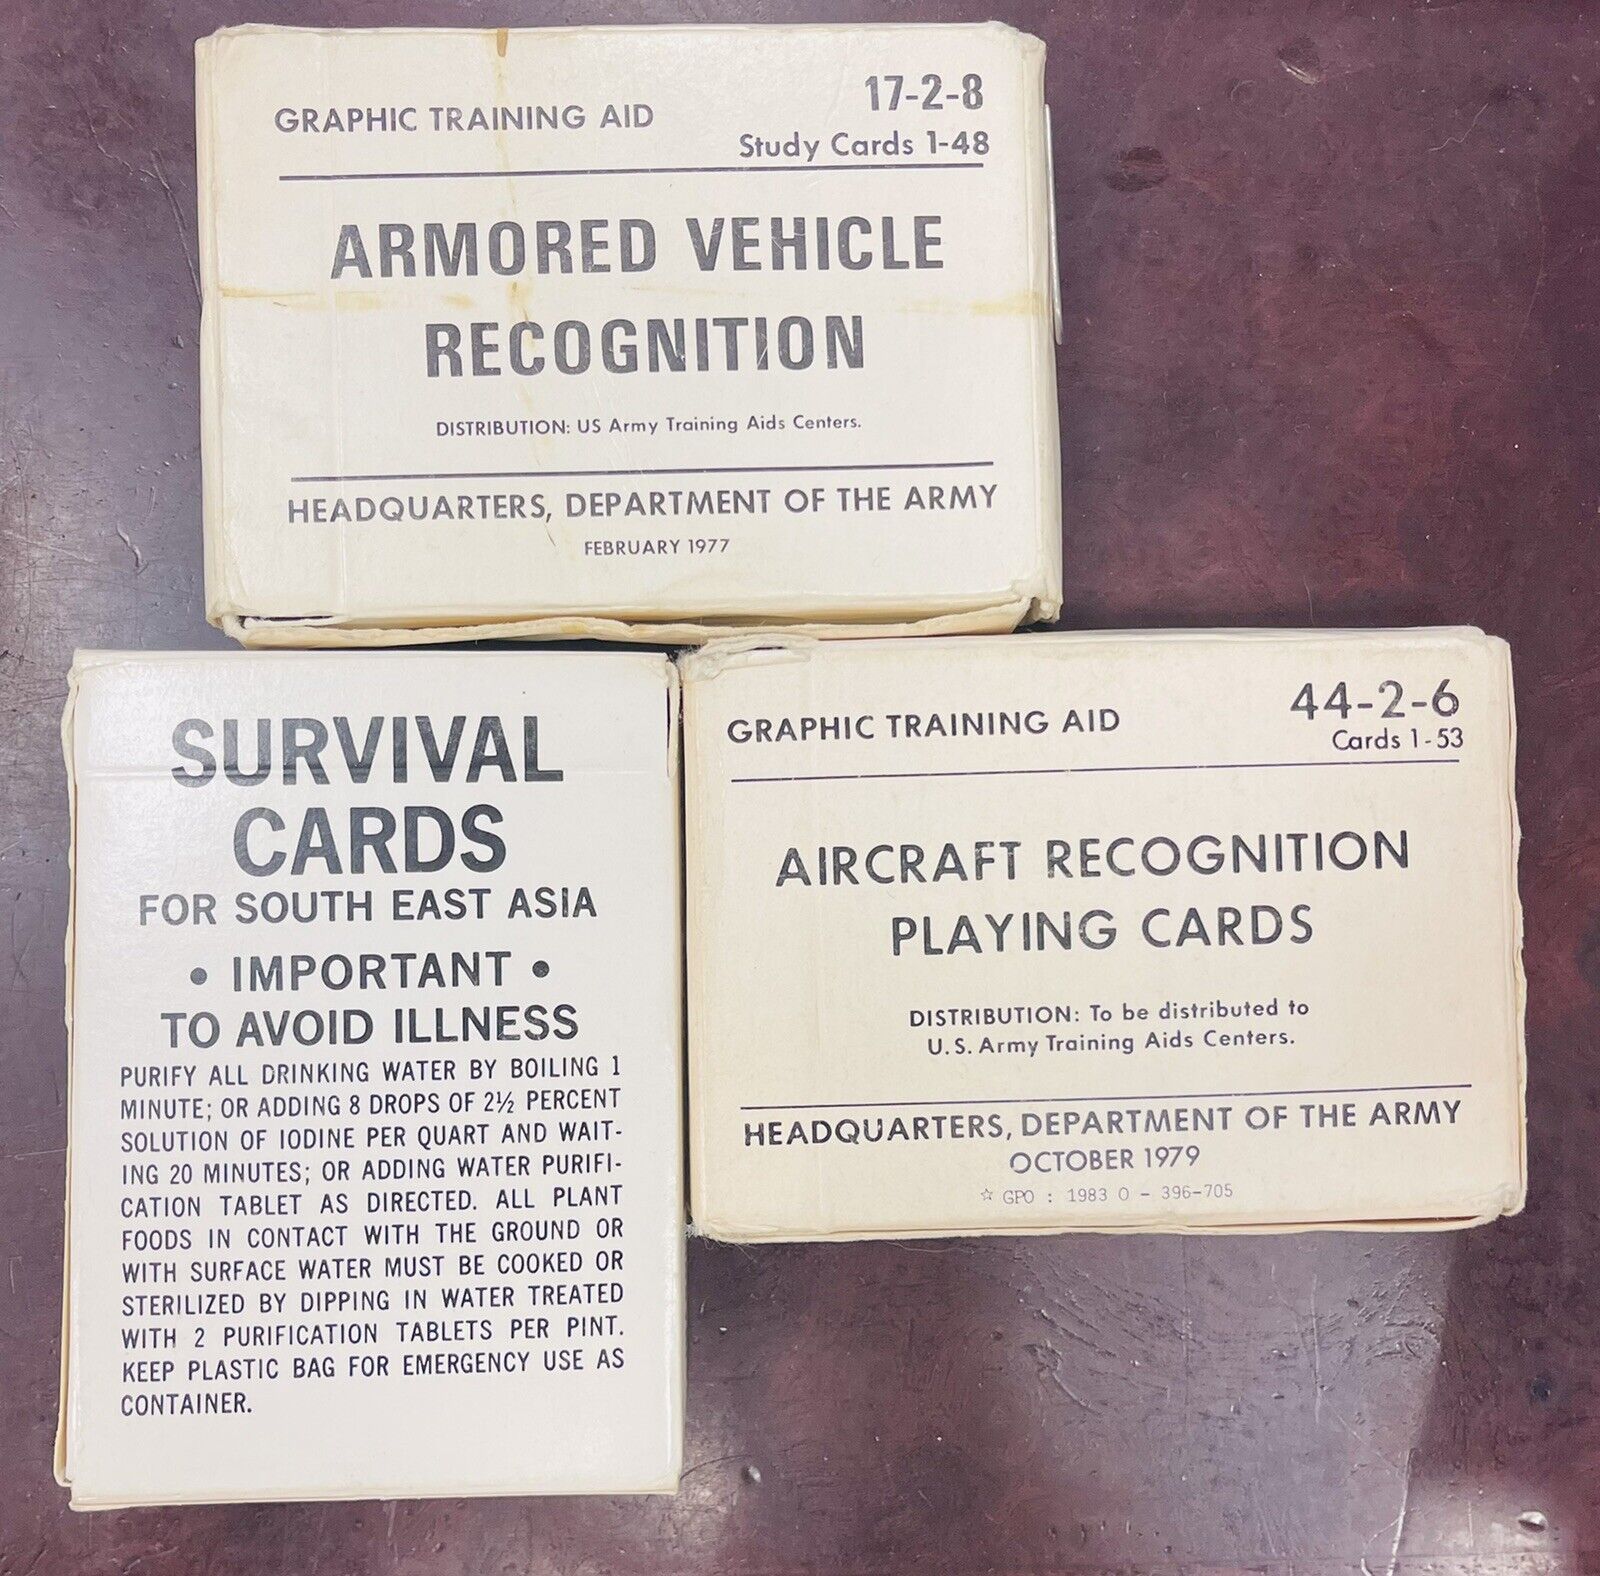 Survival Cards For South East Asia, Gta 21-7-1, Original April 1968 + More Cards